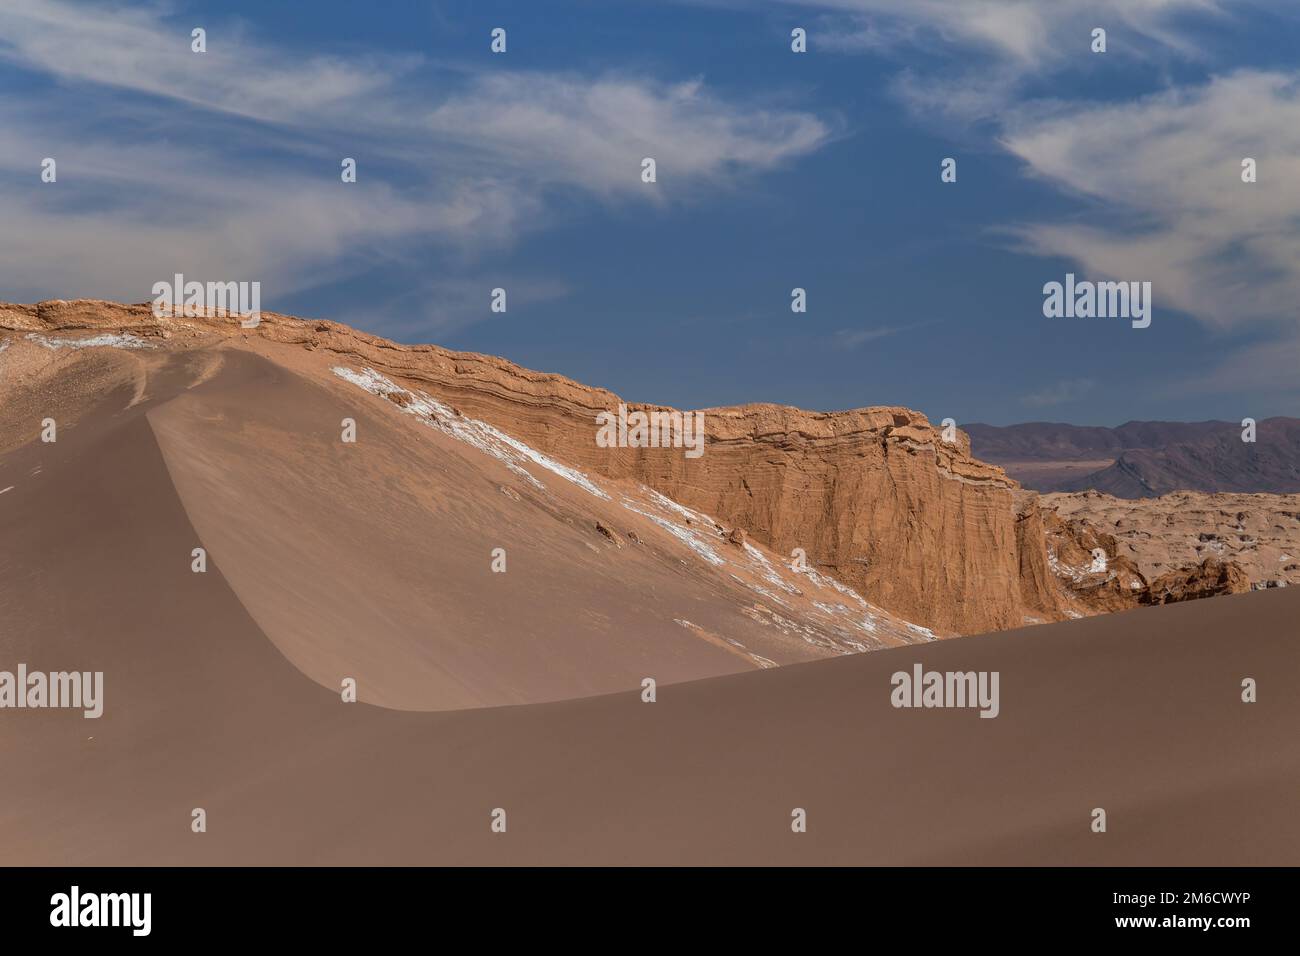 Dunes and rocks in Valle de la Luna, Atacama, Chile Stock Photo